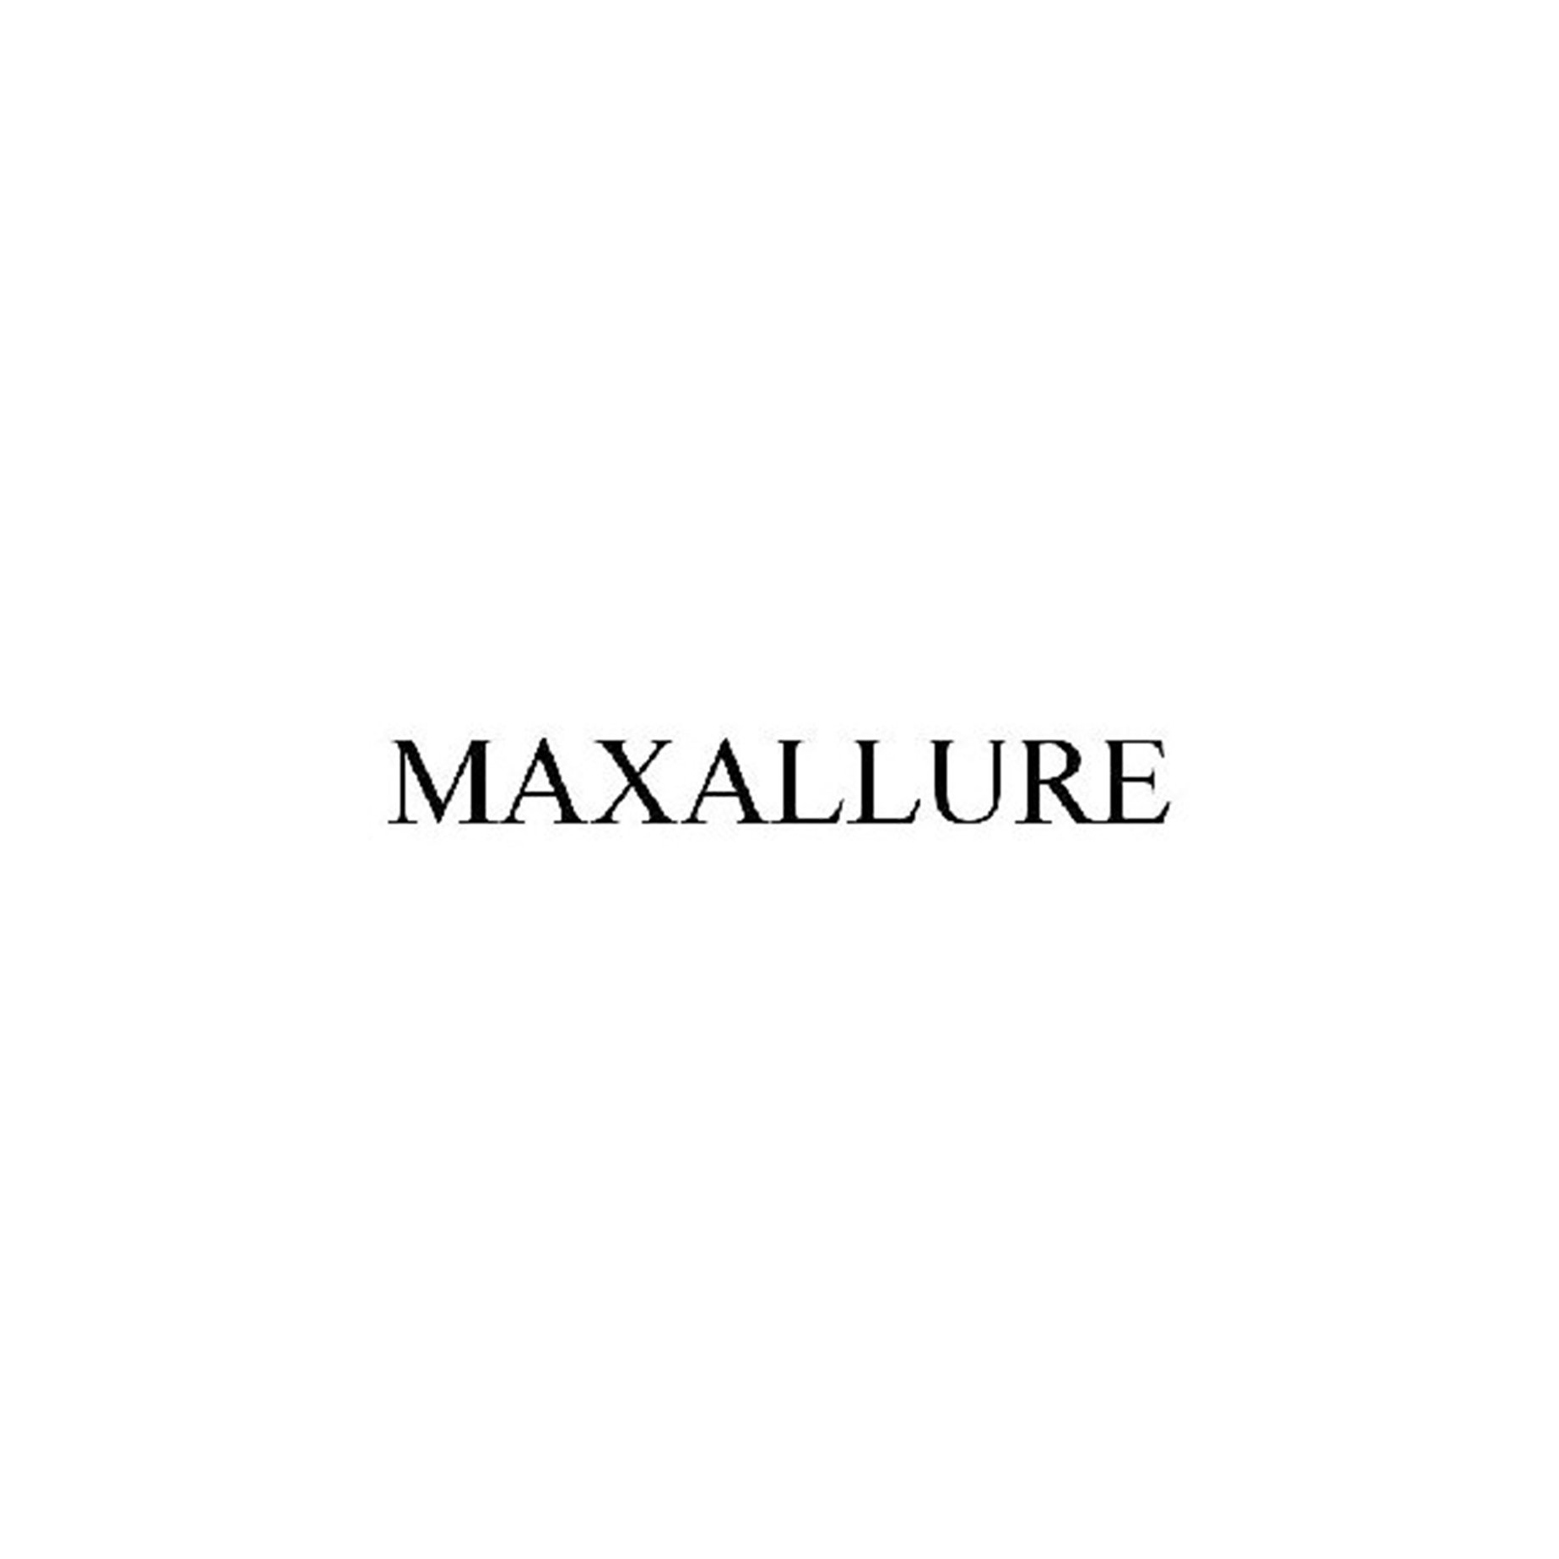 MAXALLURE